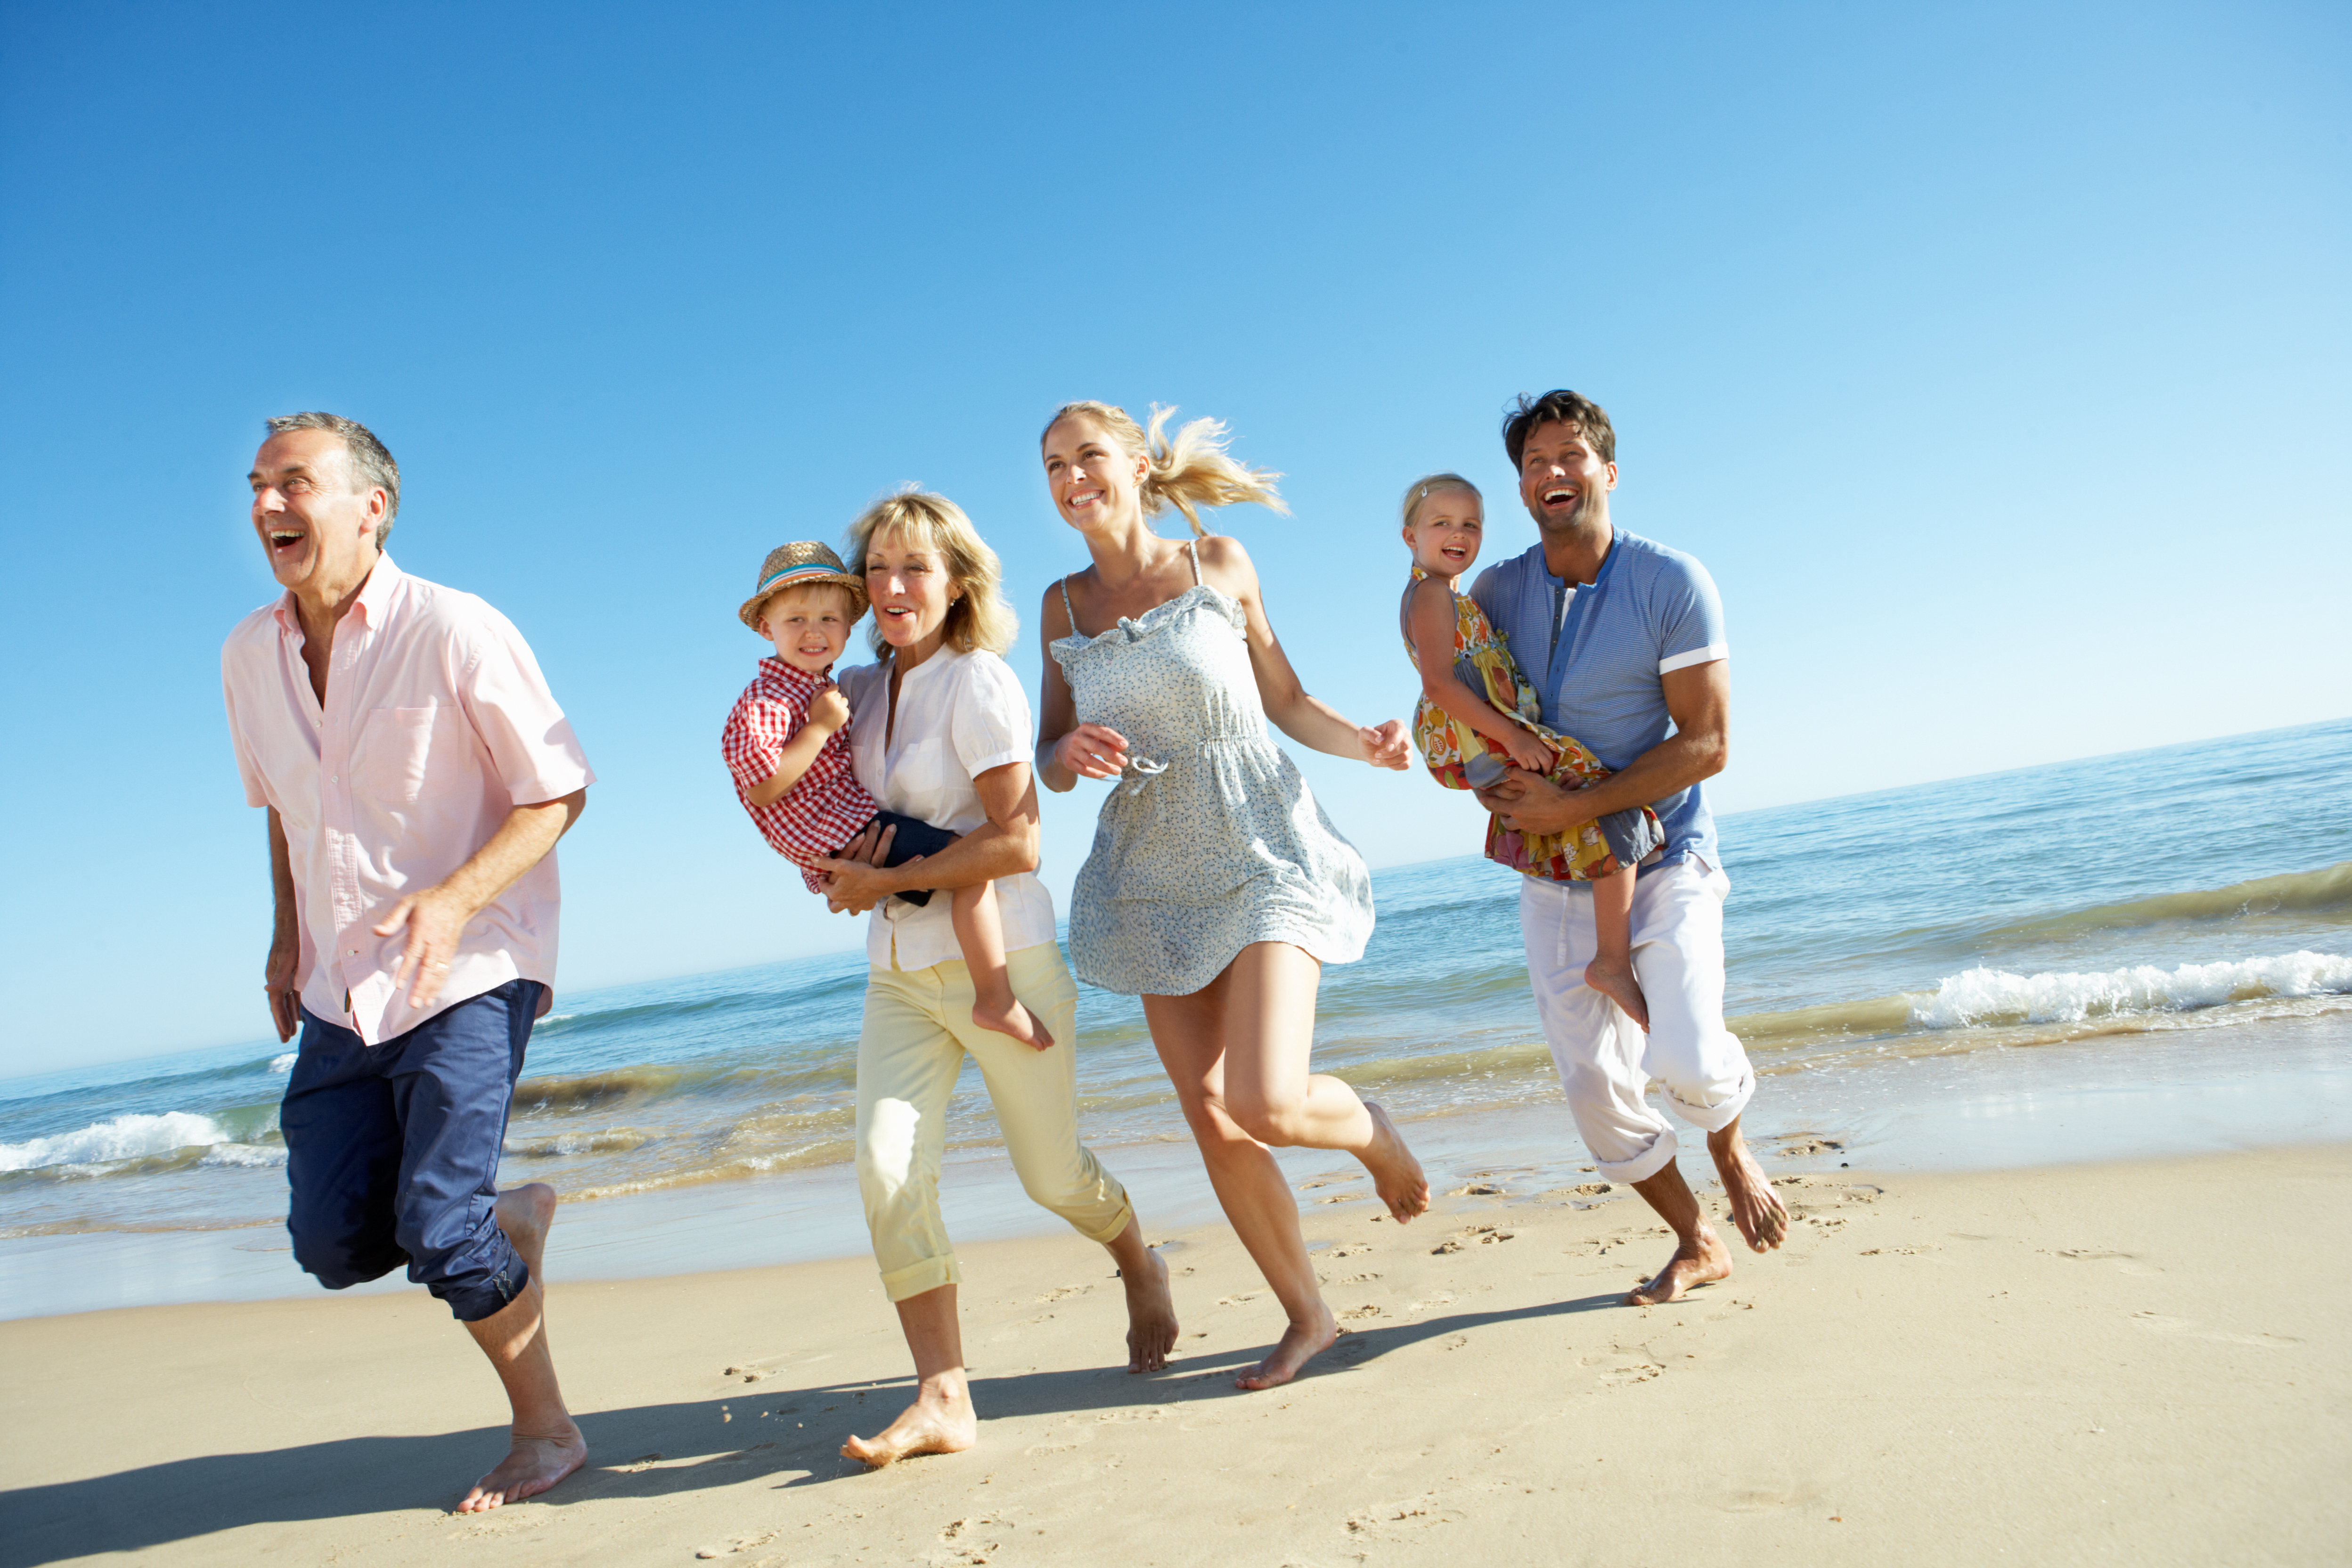 A family enjoying at the beach | Source: Shutterstock